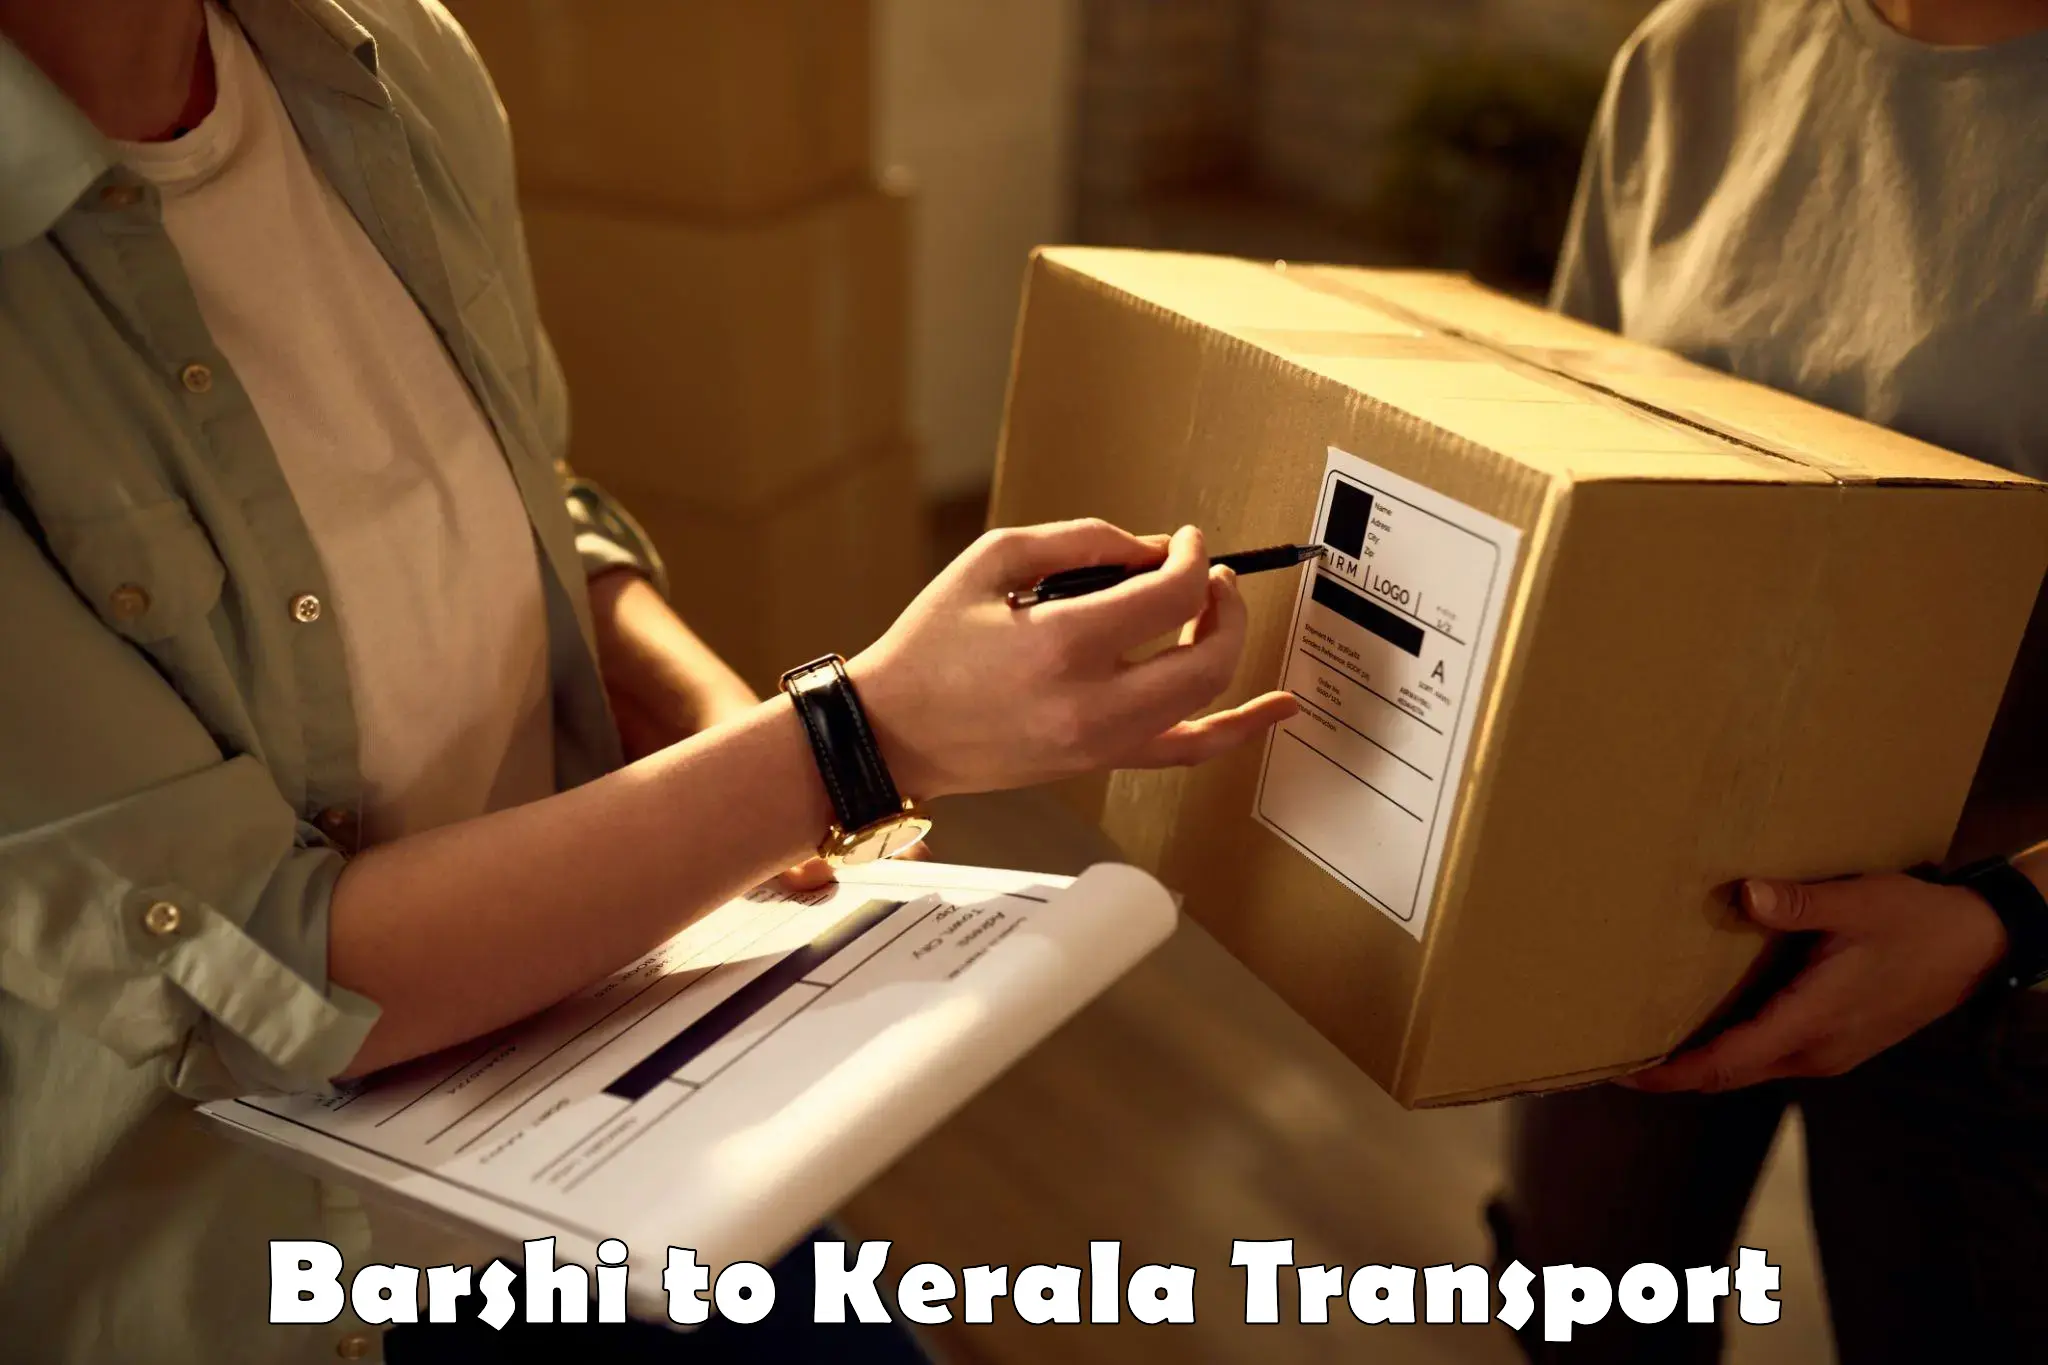 Transport in sharing in Barshi to Kerala